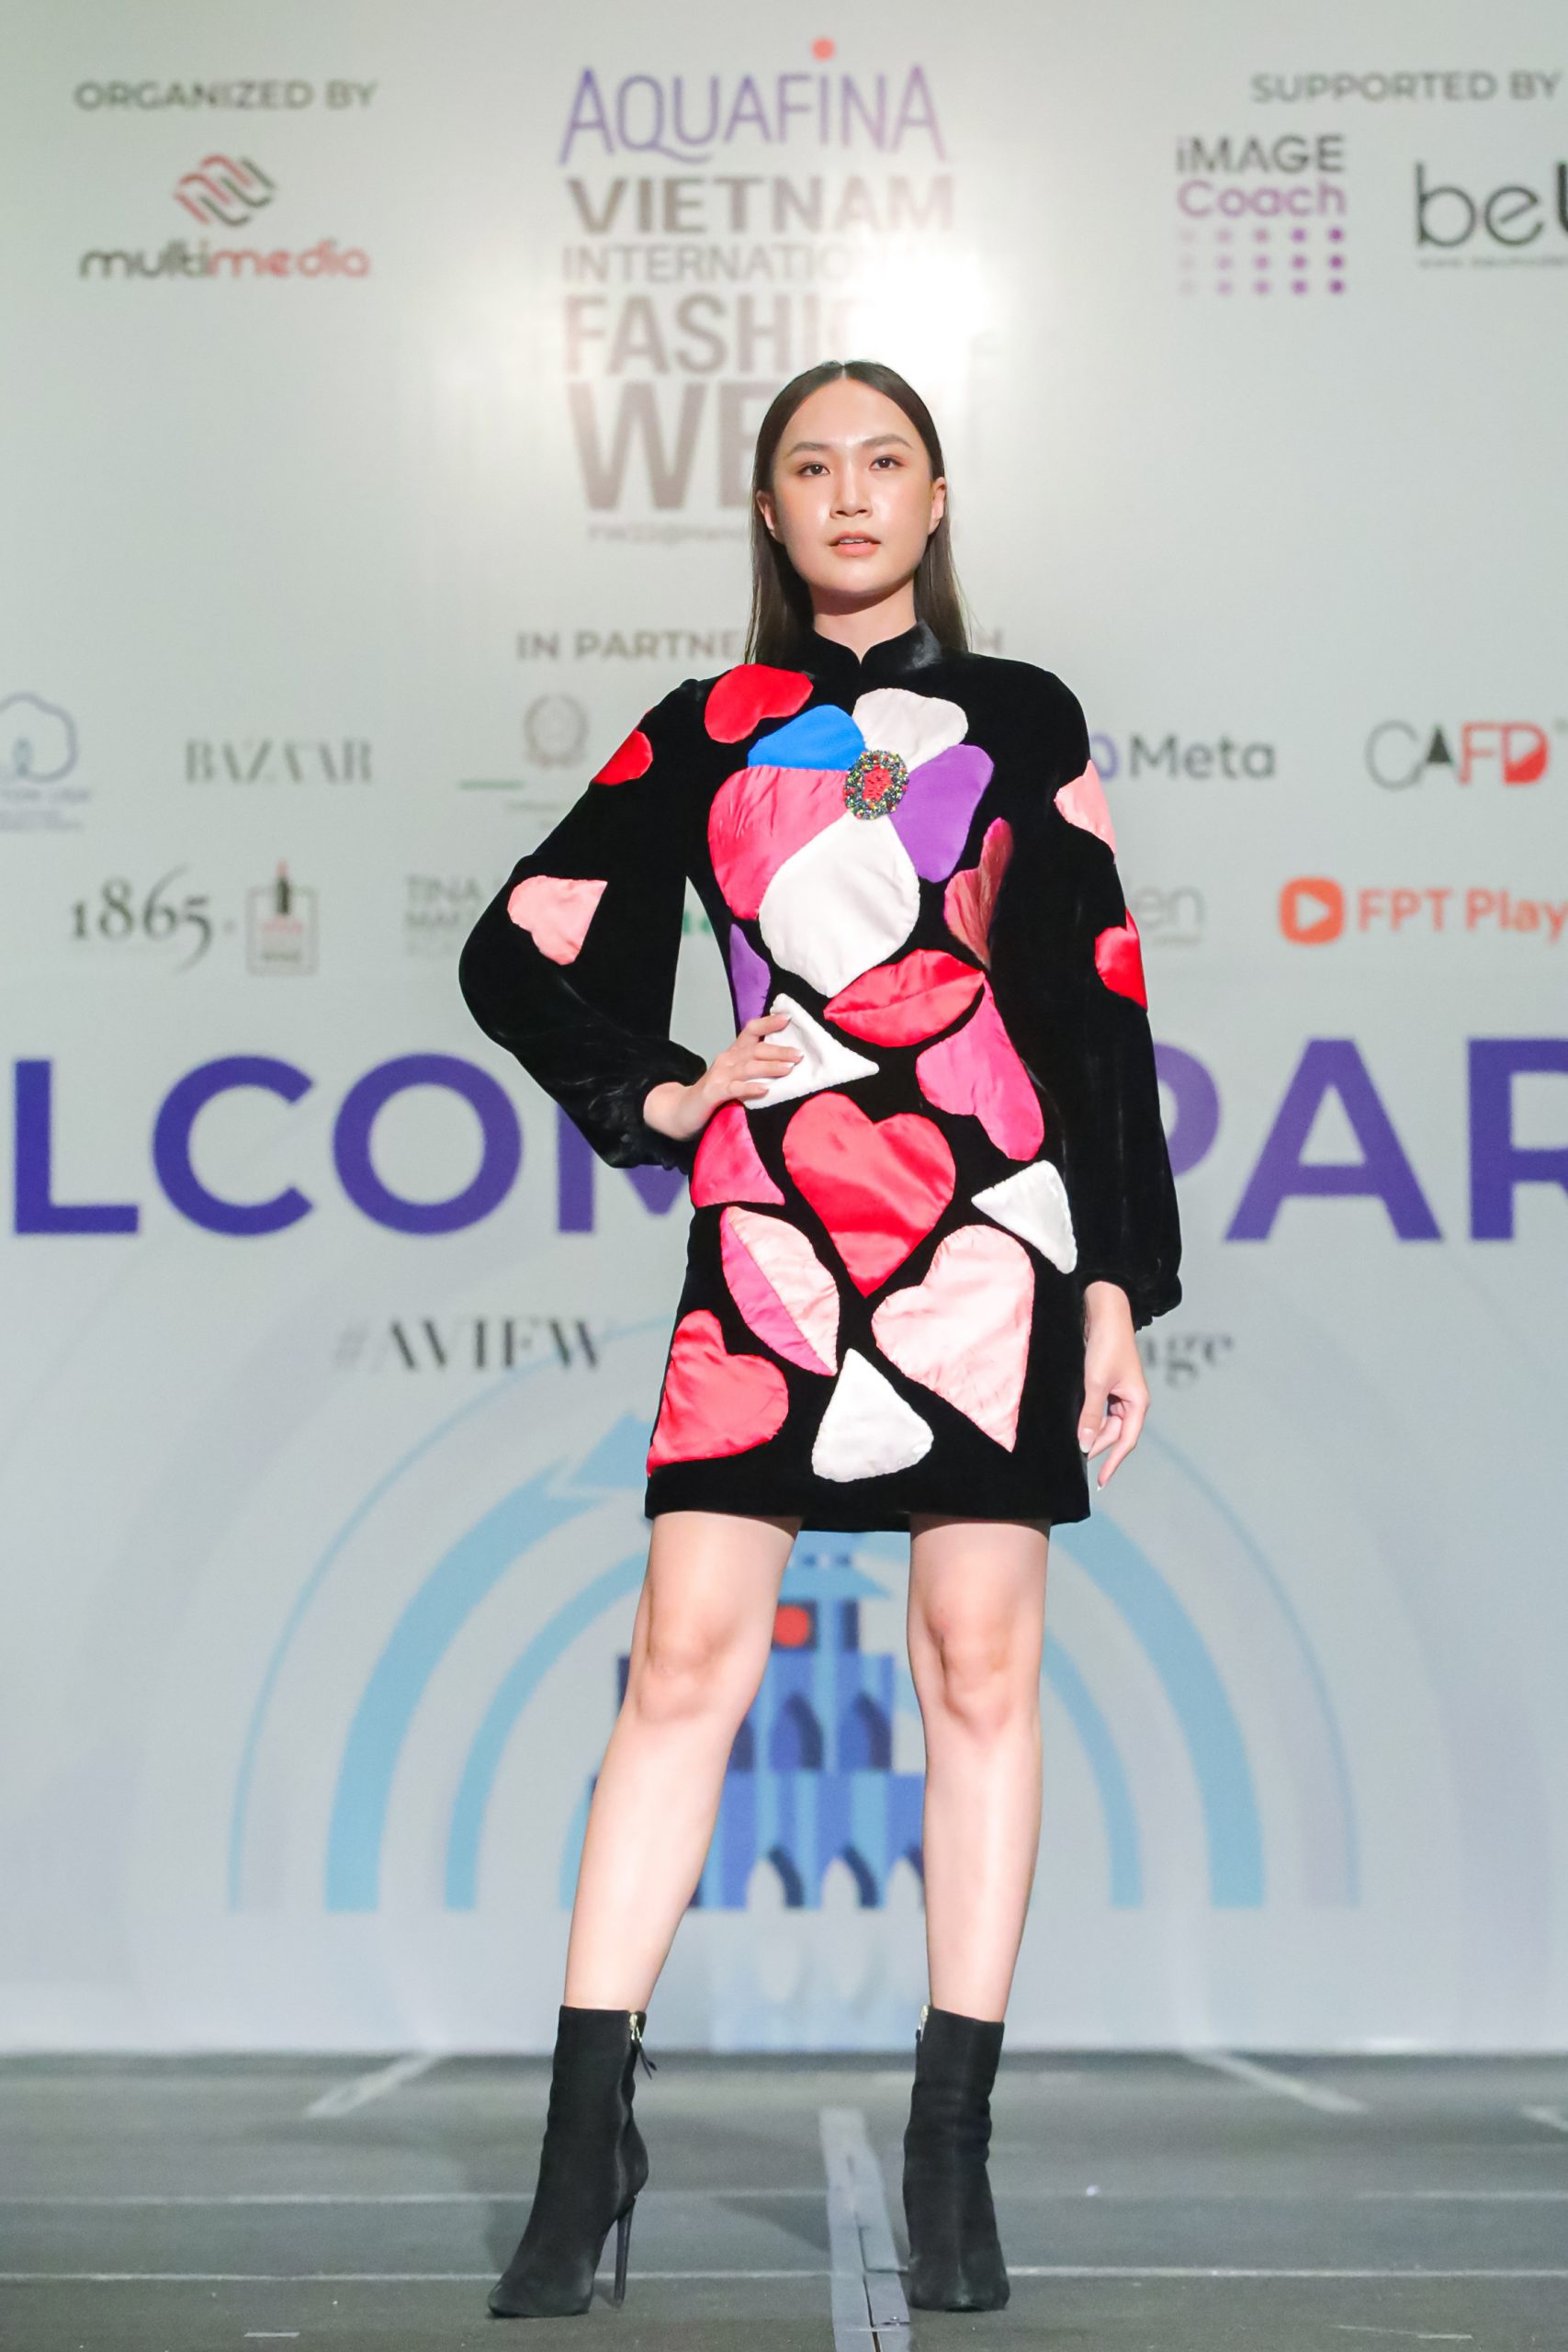 Harper's Bazaar_Aquafina Vietnam International Fashion Week AVIFW_02